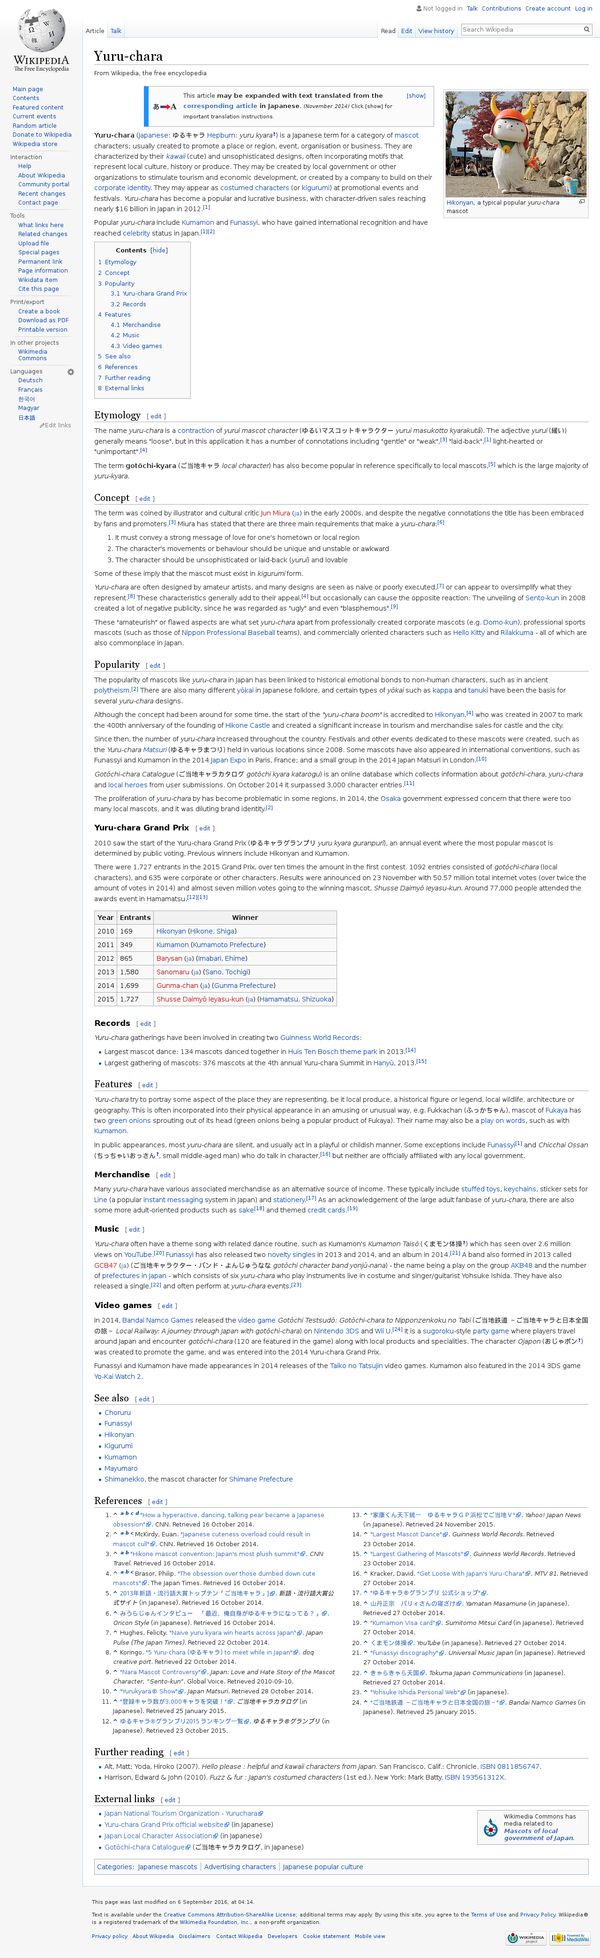 Yuru-chara - Wikipedia, the free encyclopedia